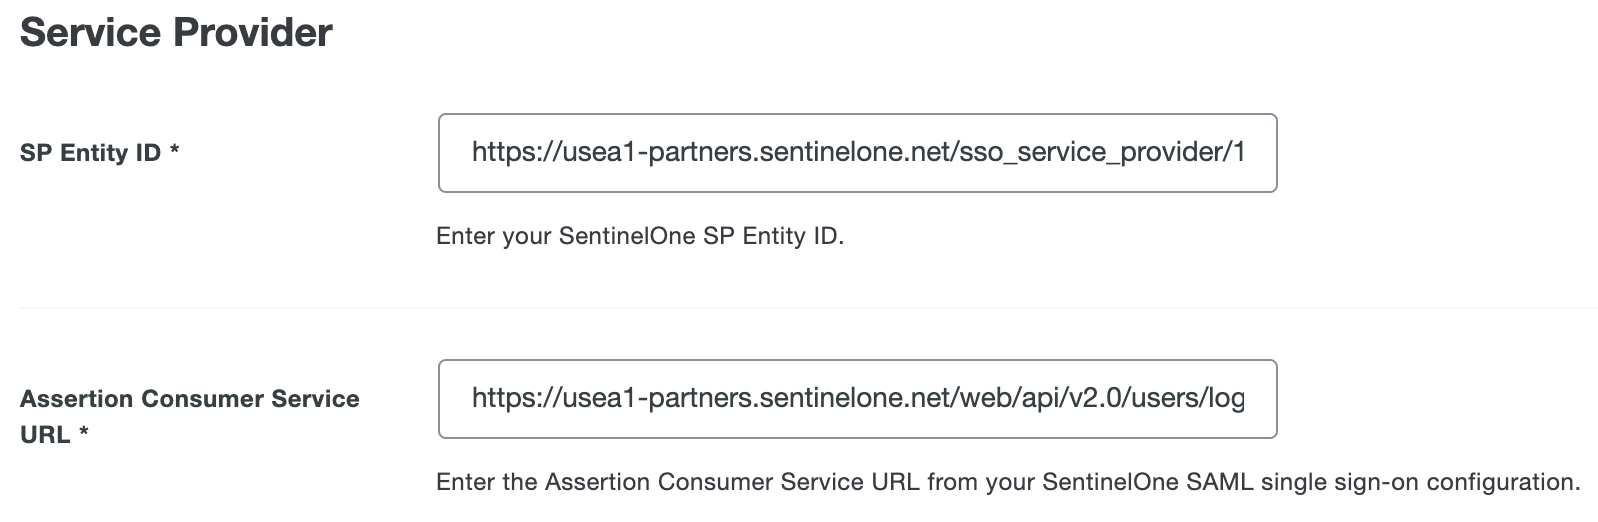 Duo SentinelOne SSO Service Provider URLs